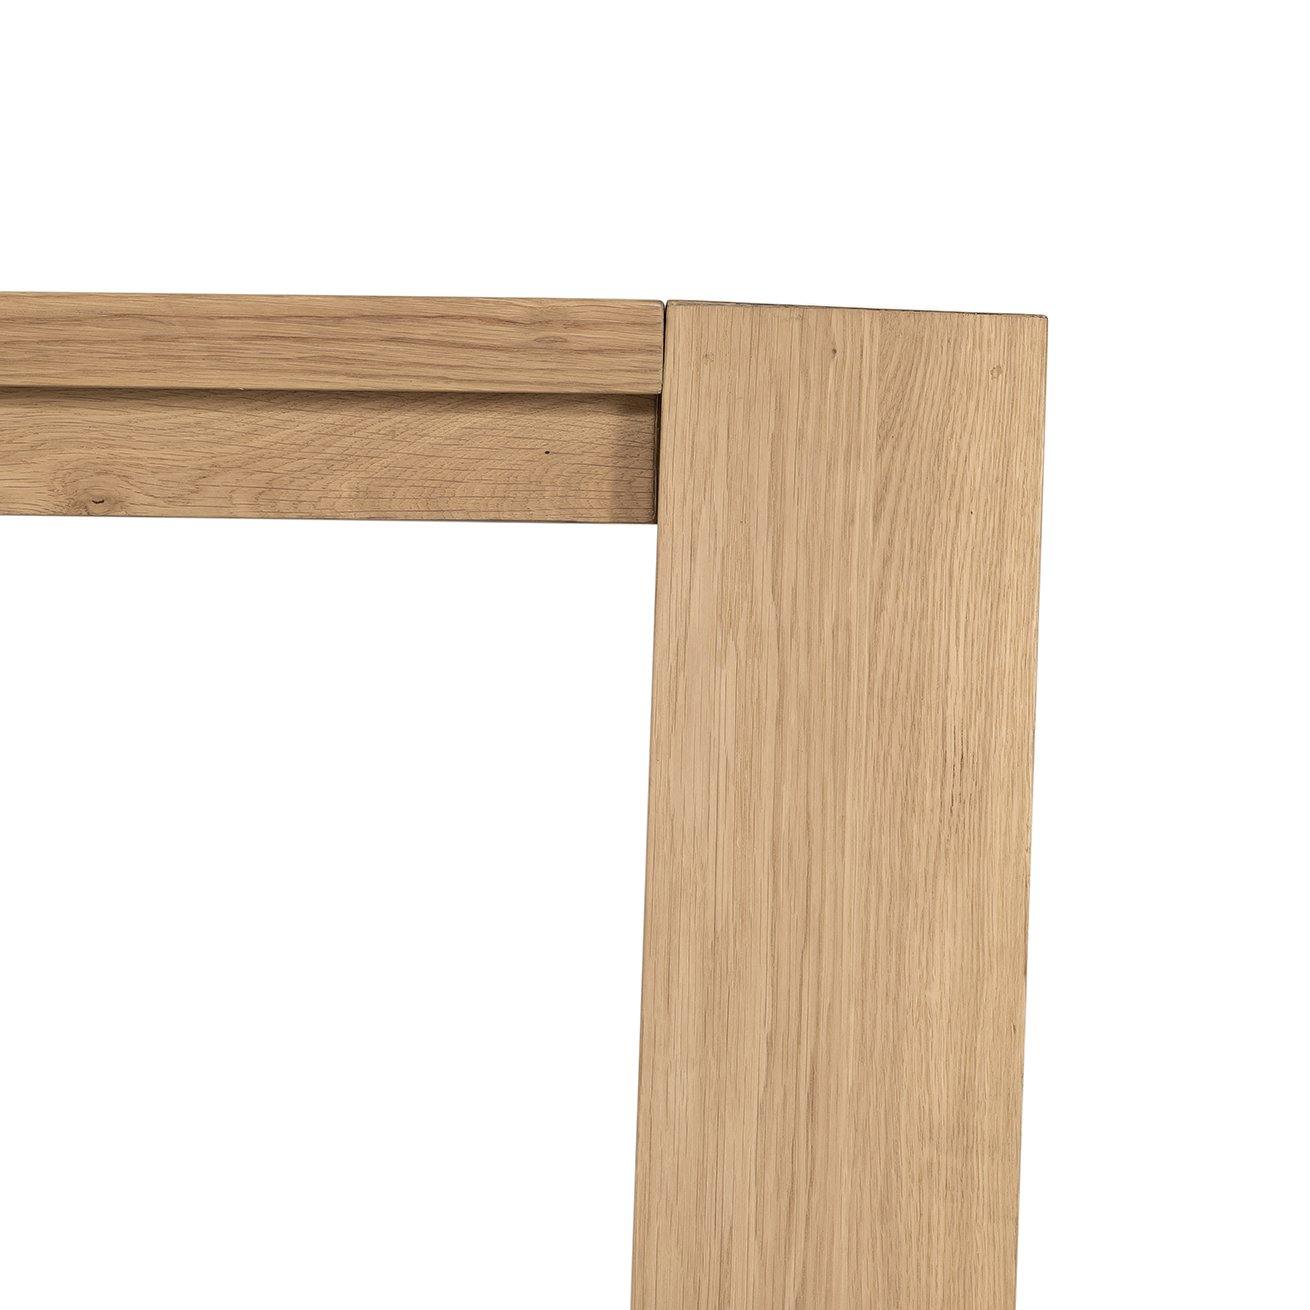 Capra Oak Dining Table - Reimagine Designs - dining table, new